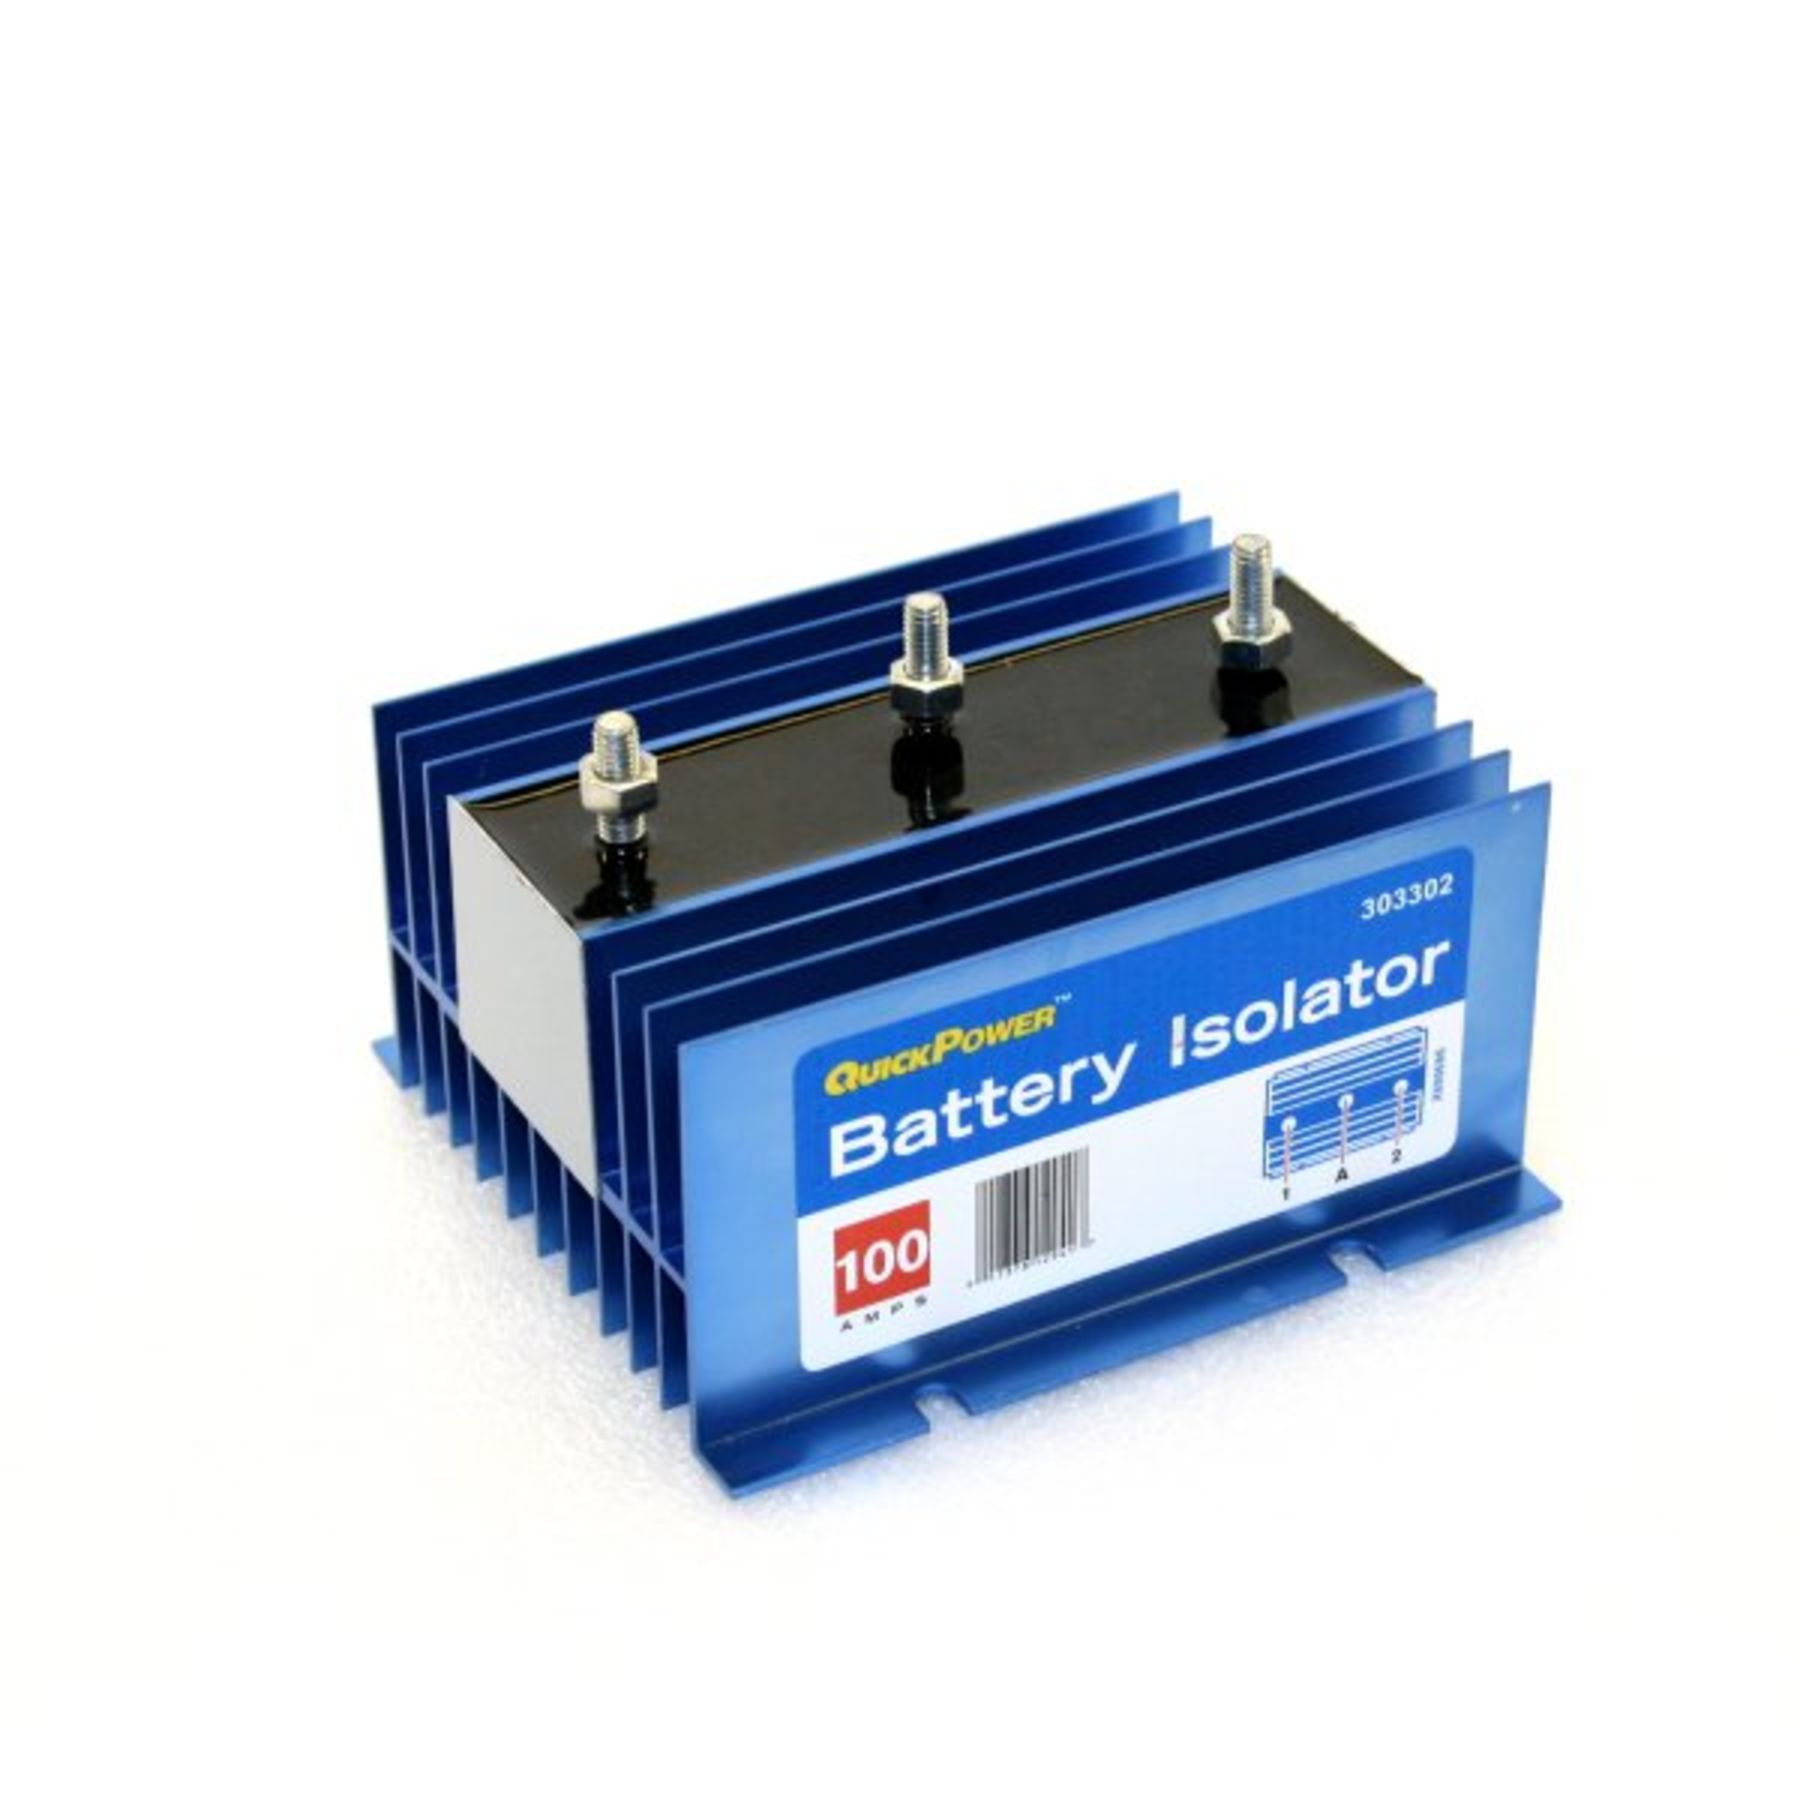 Quick Power 120 Amp Battery Isolator Bi303303